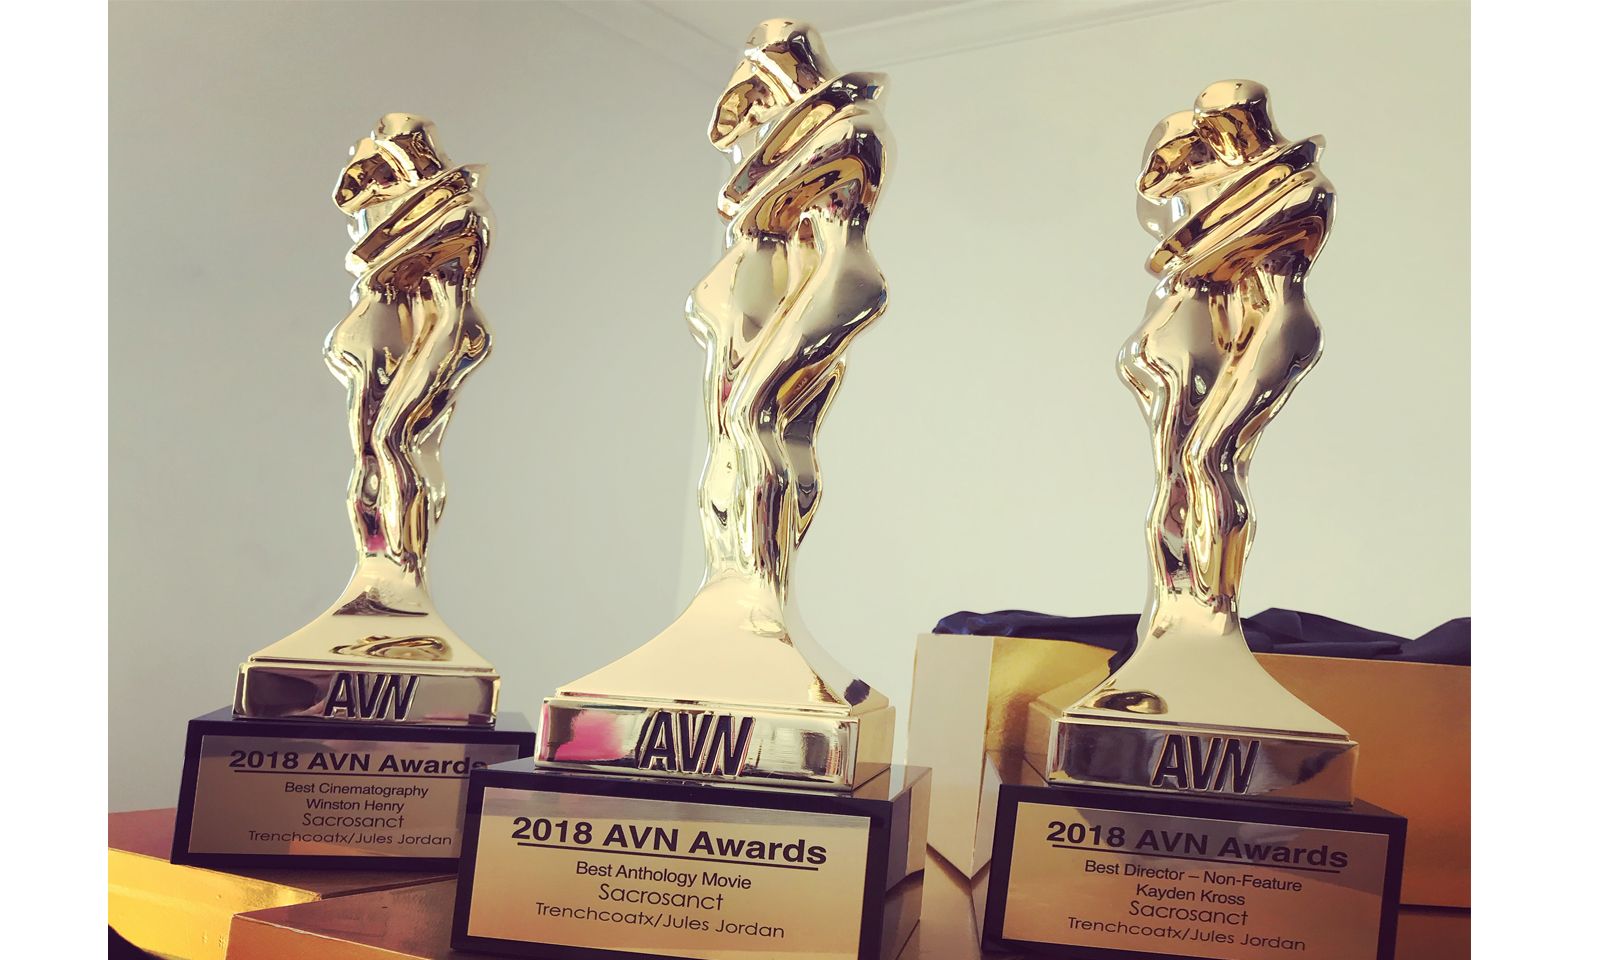 Trenchcoatx and Kayden Kross Bring Home Three 2018 AVN Awards